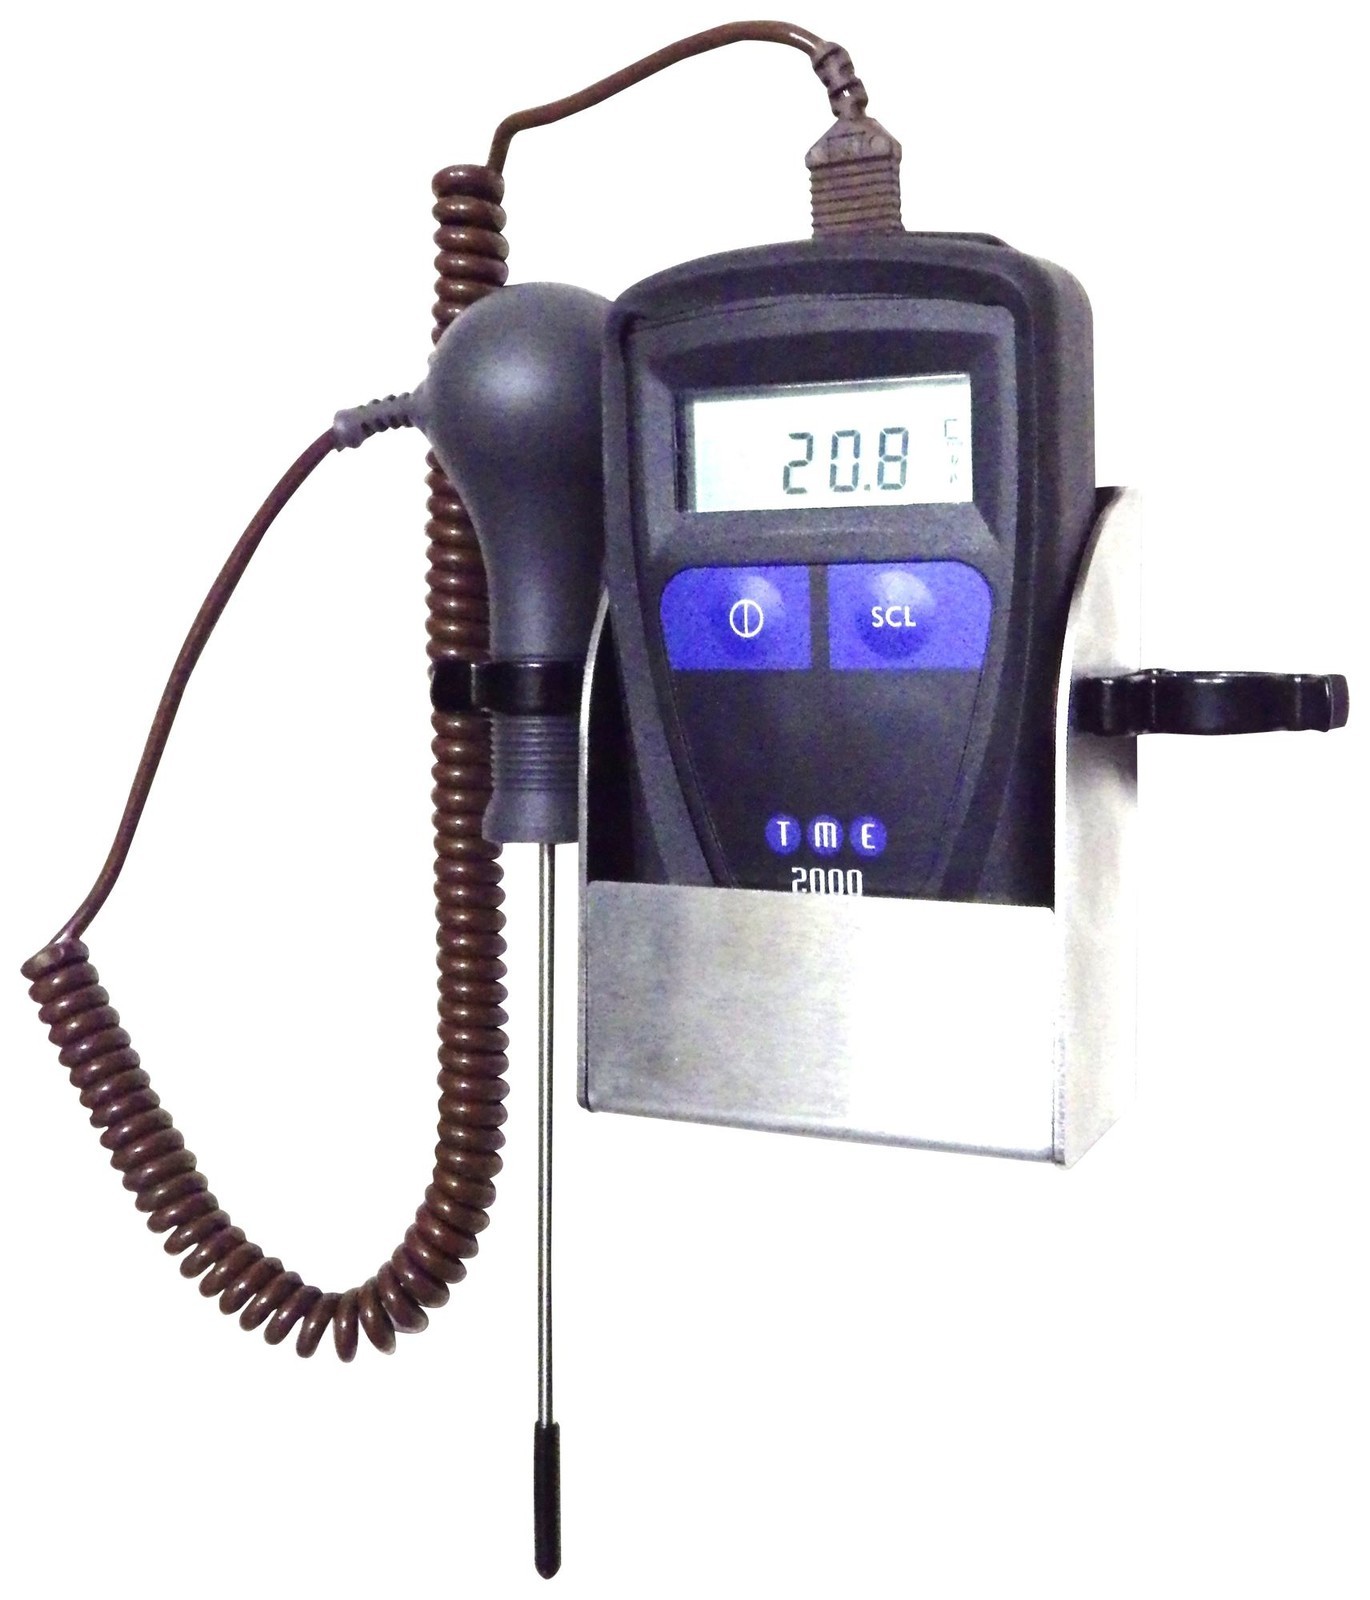 Tme mmwallkit Temperature Monitoring Kit, Type T